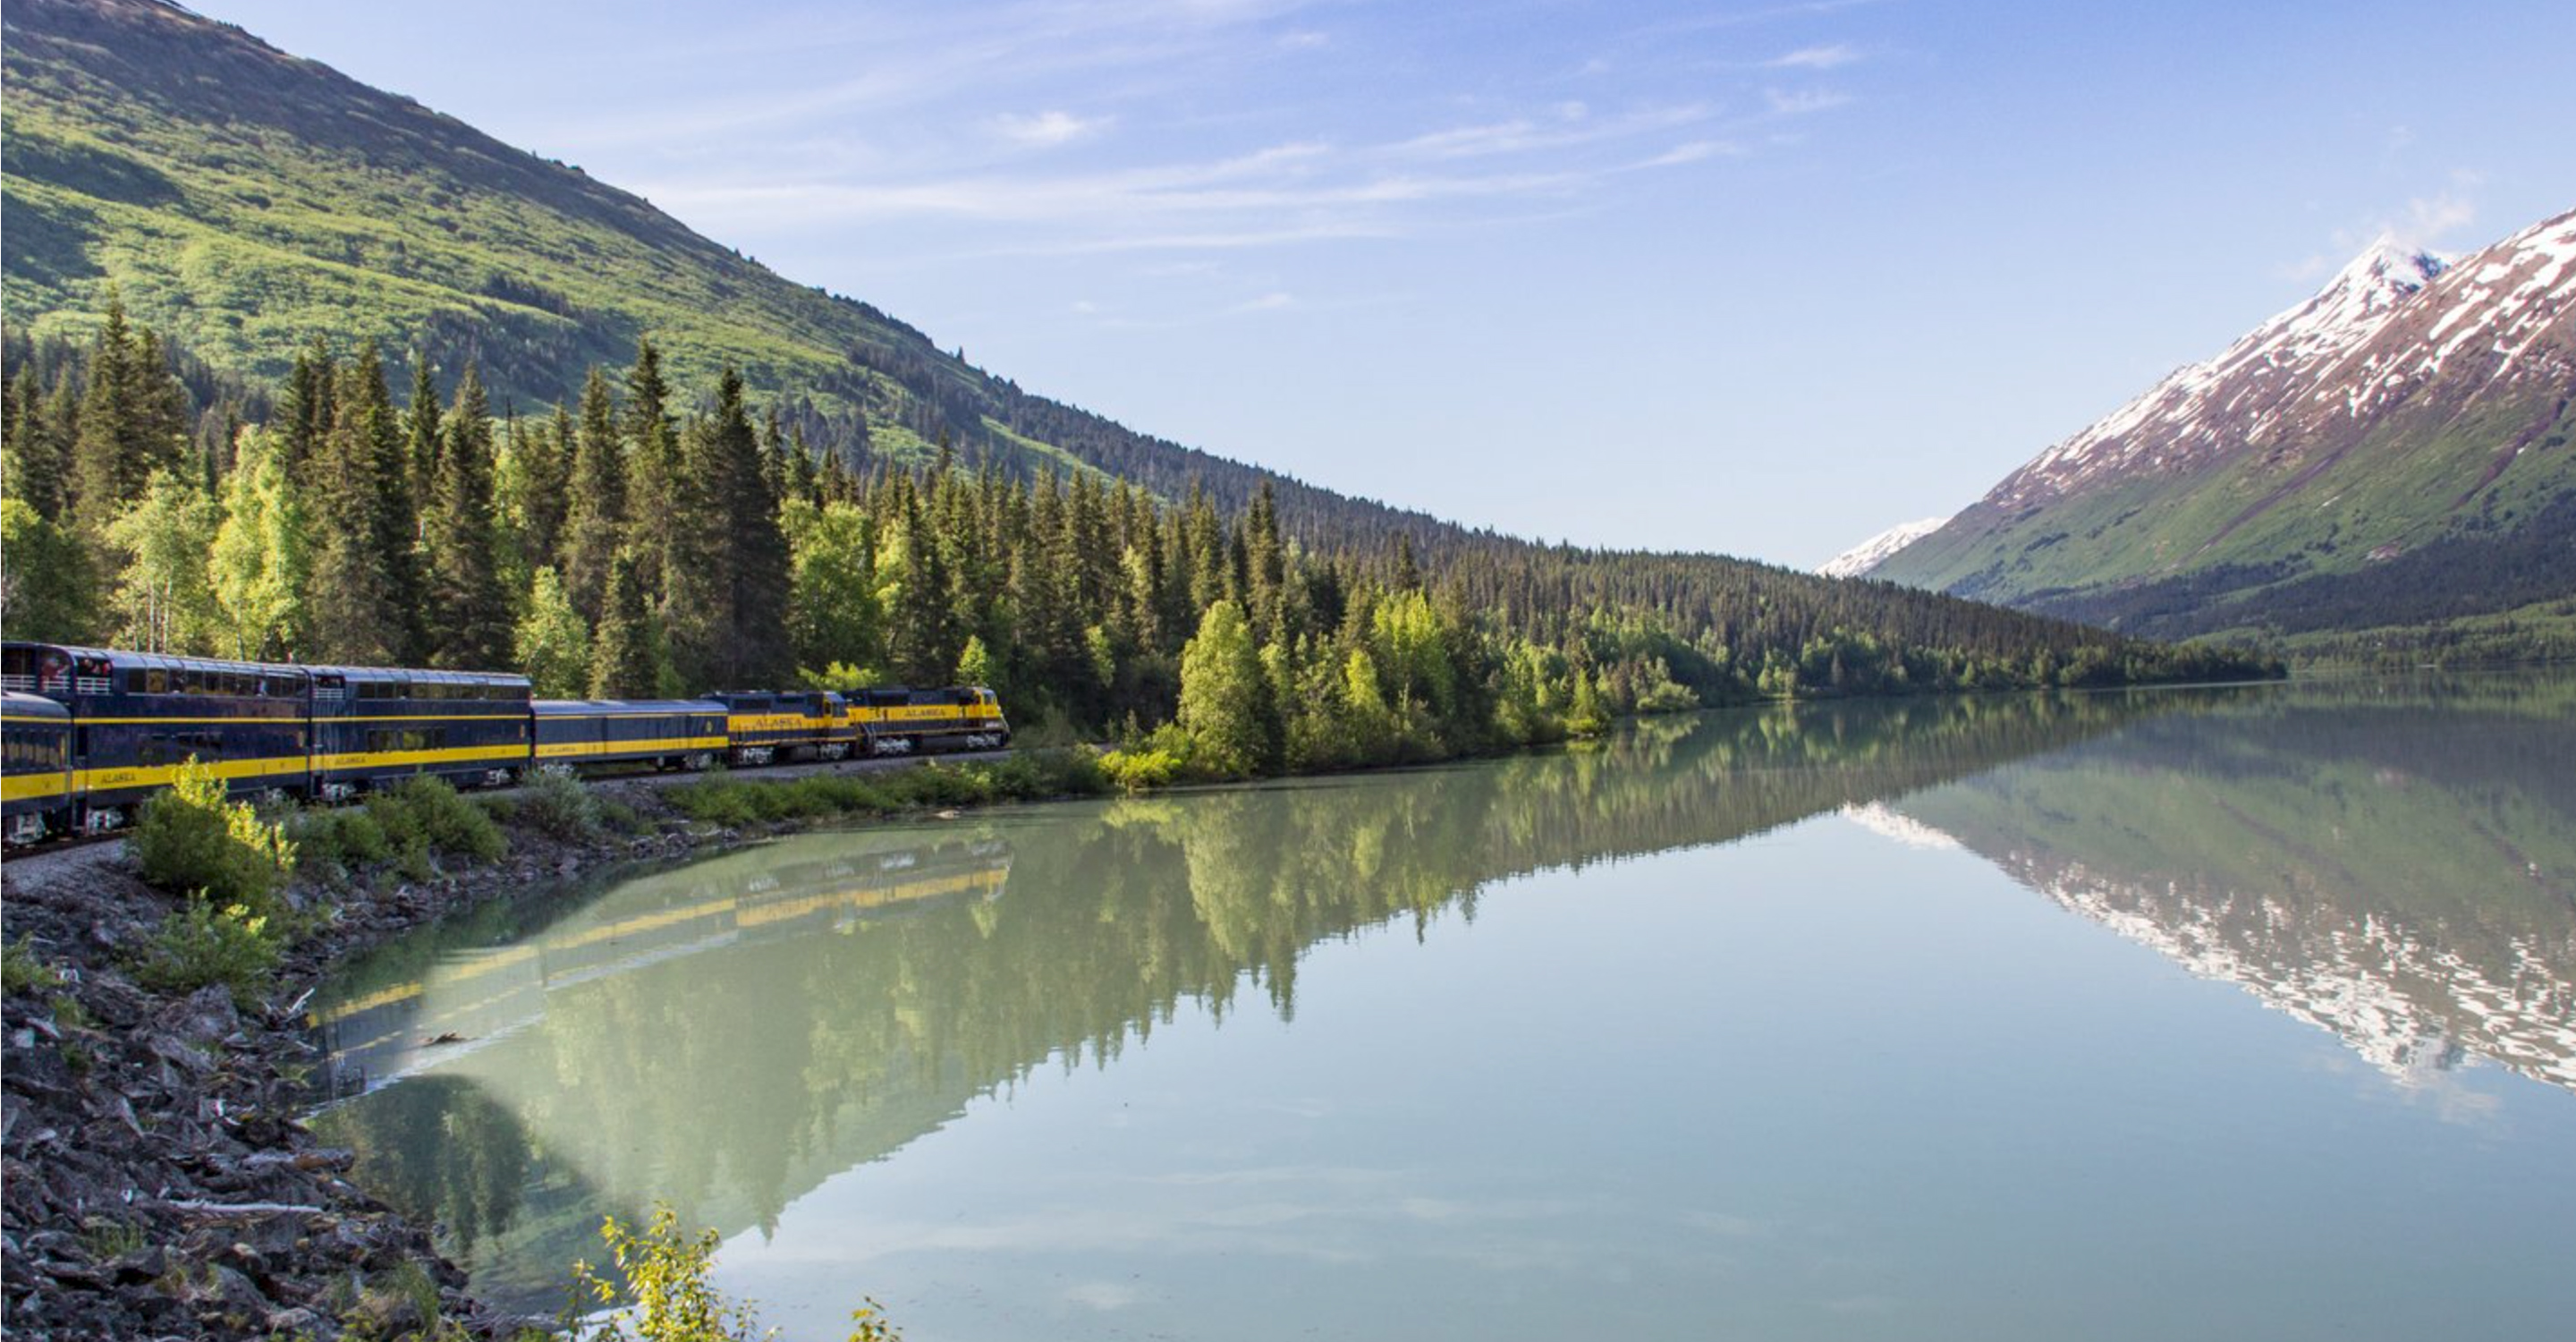 The Alaska Railroad train chugs through the Placer River Valley, Chugach Range, Alaska, USA